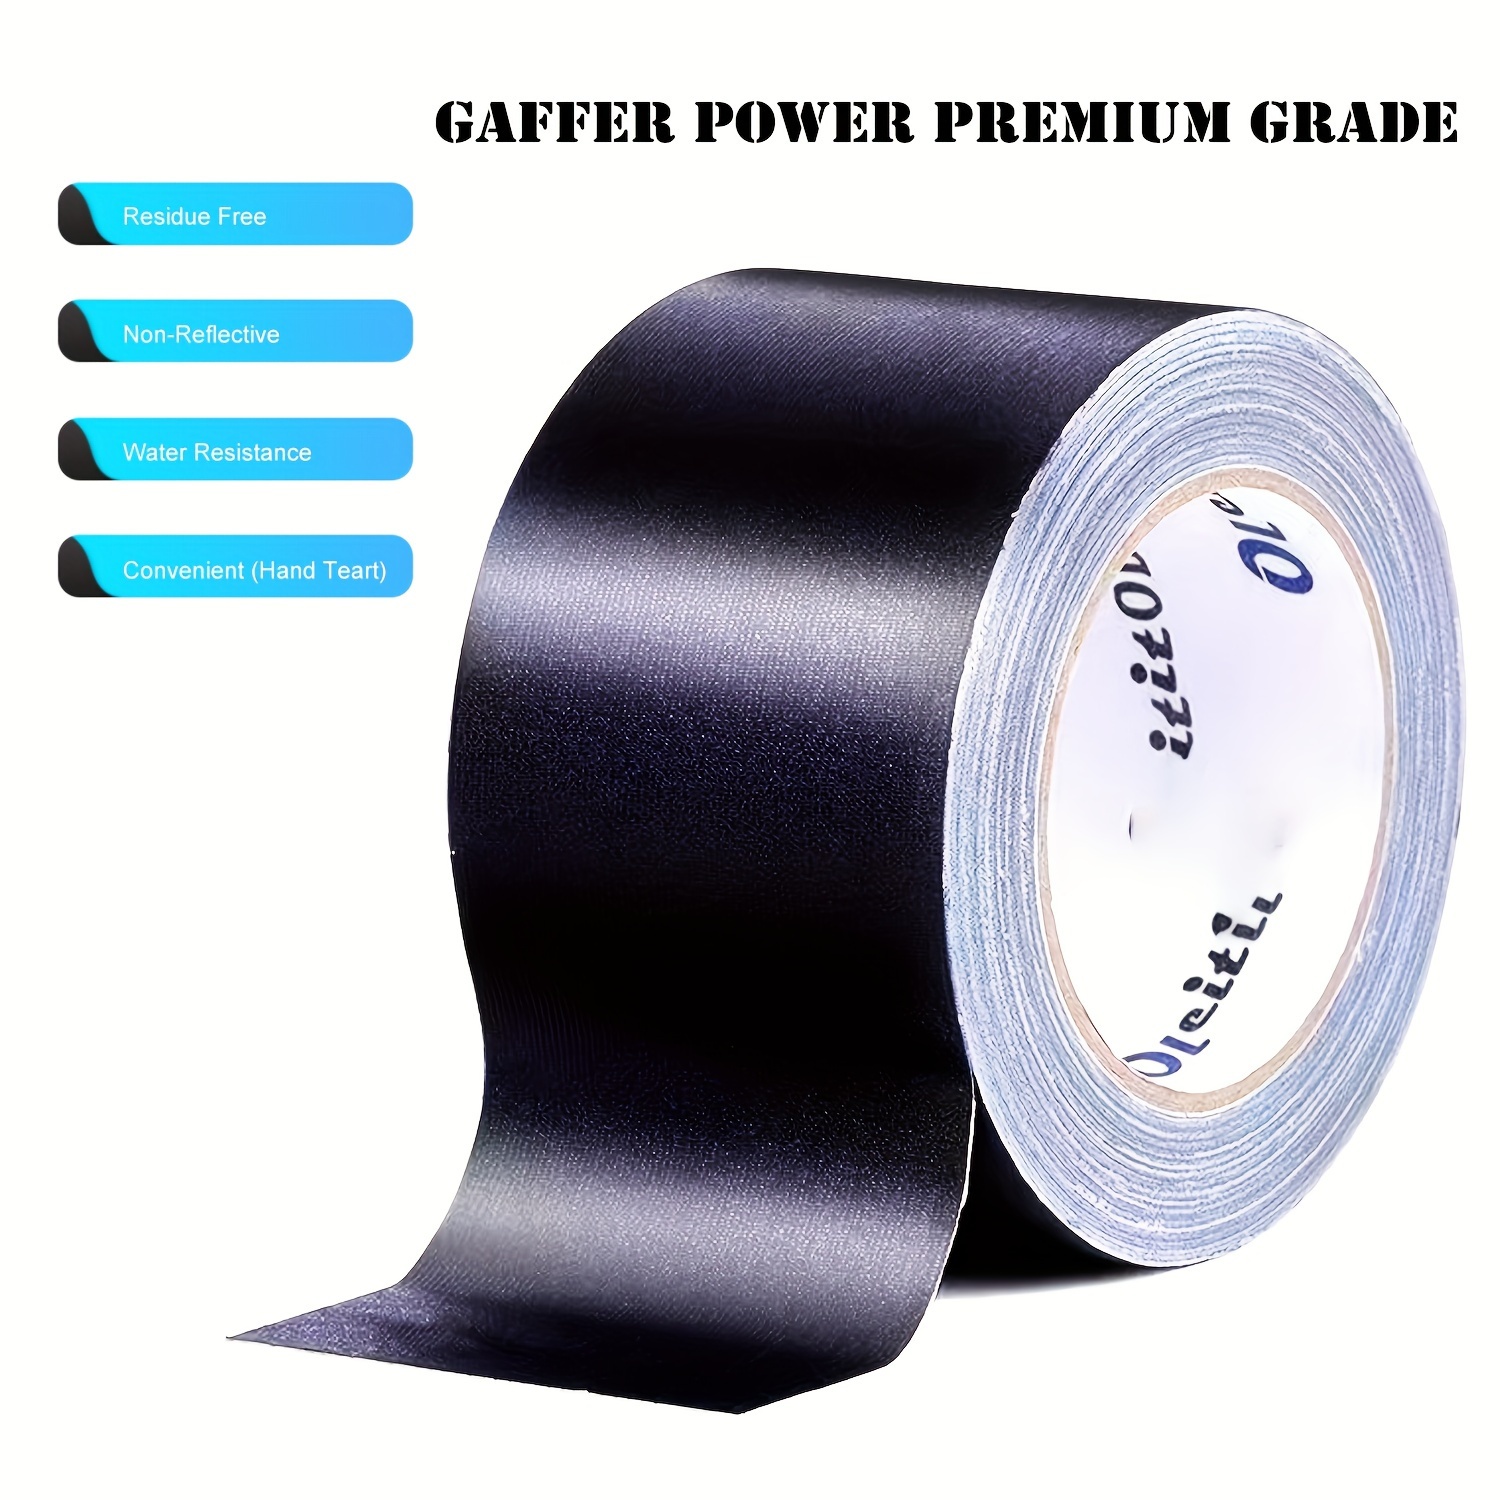 Gaffer Tape - 3 In x 30 Yards - Brown – Gaffer Power